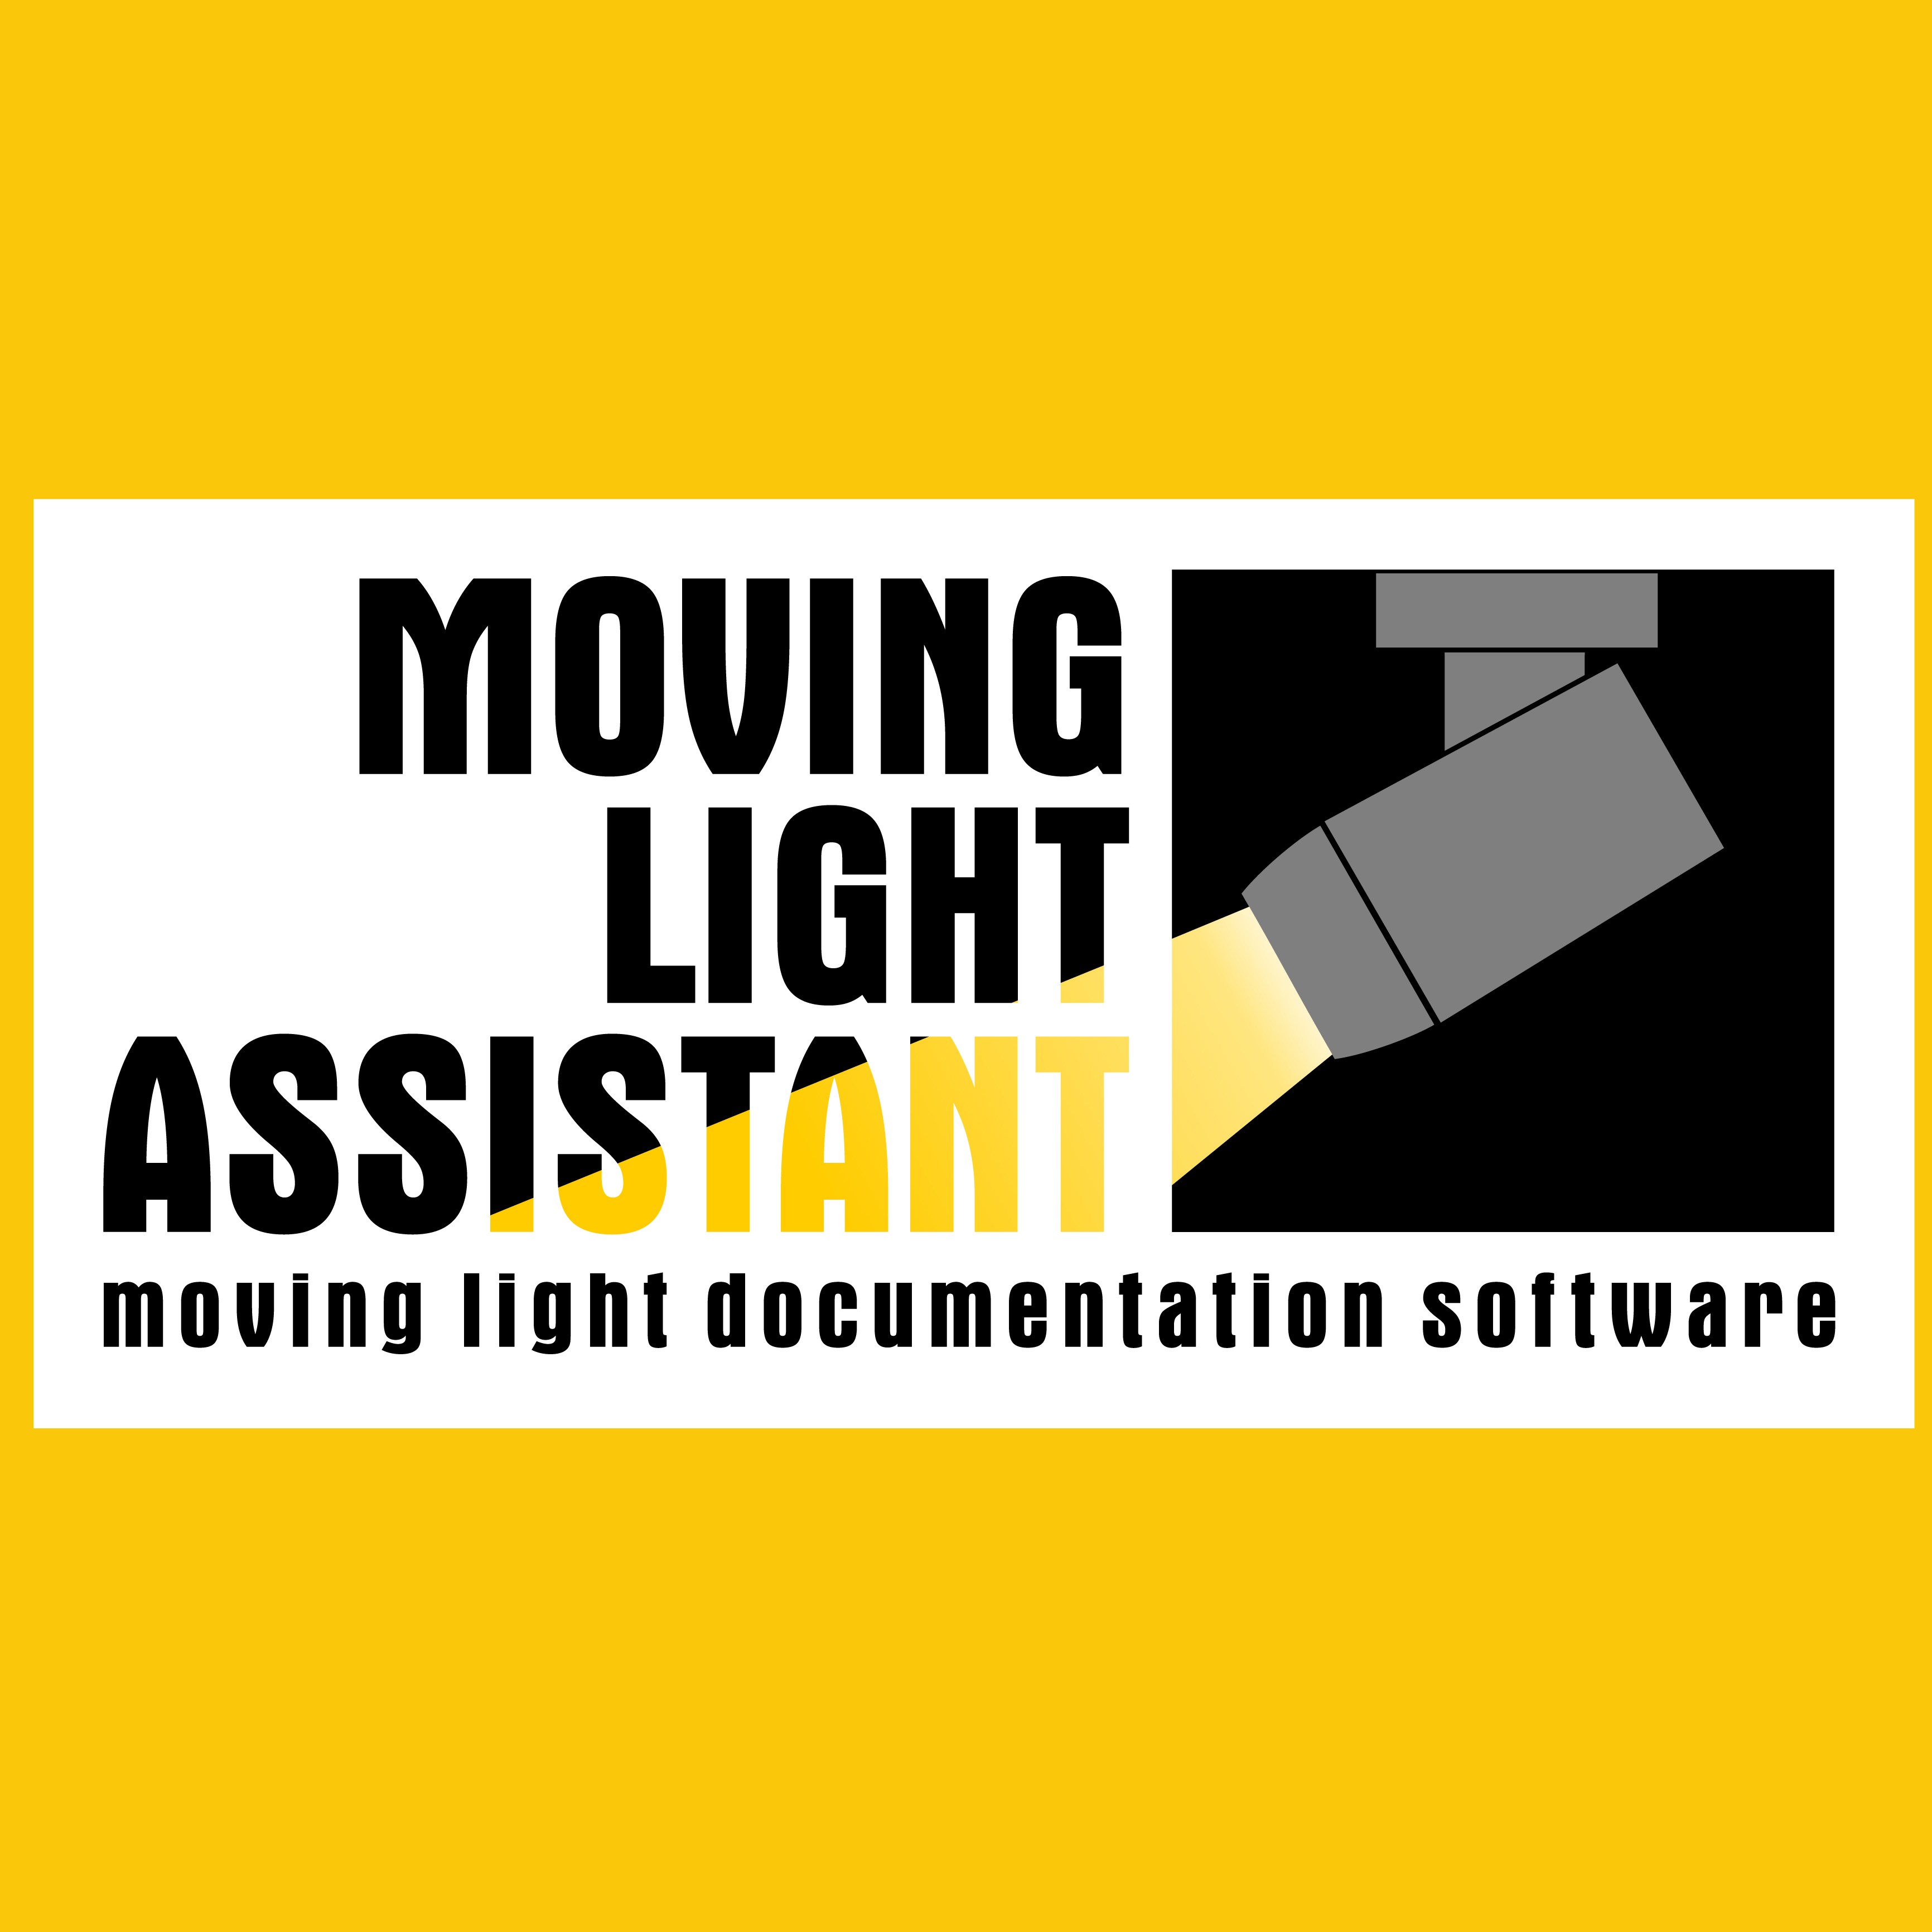 Moving Light Assistant software logo